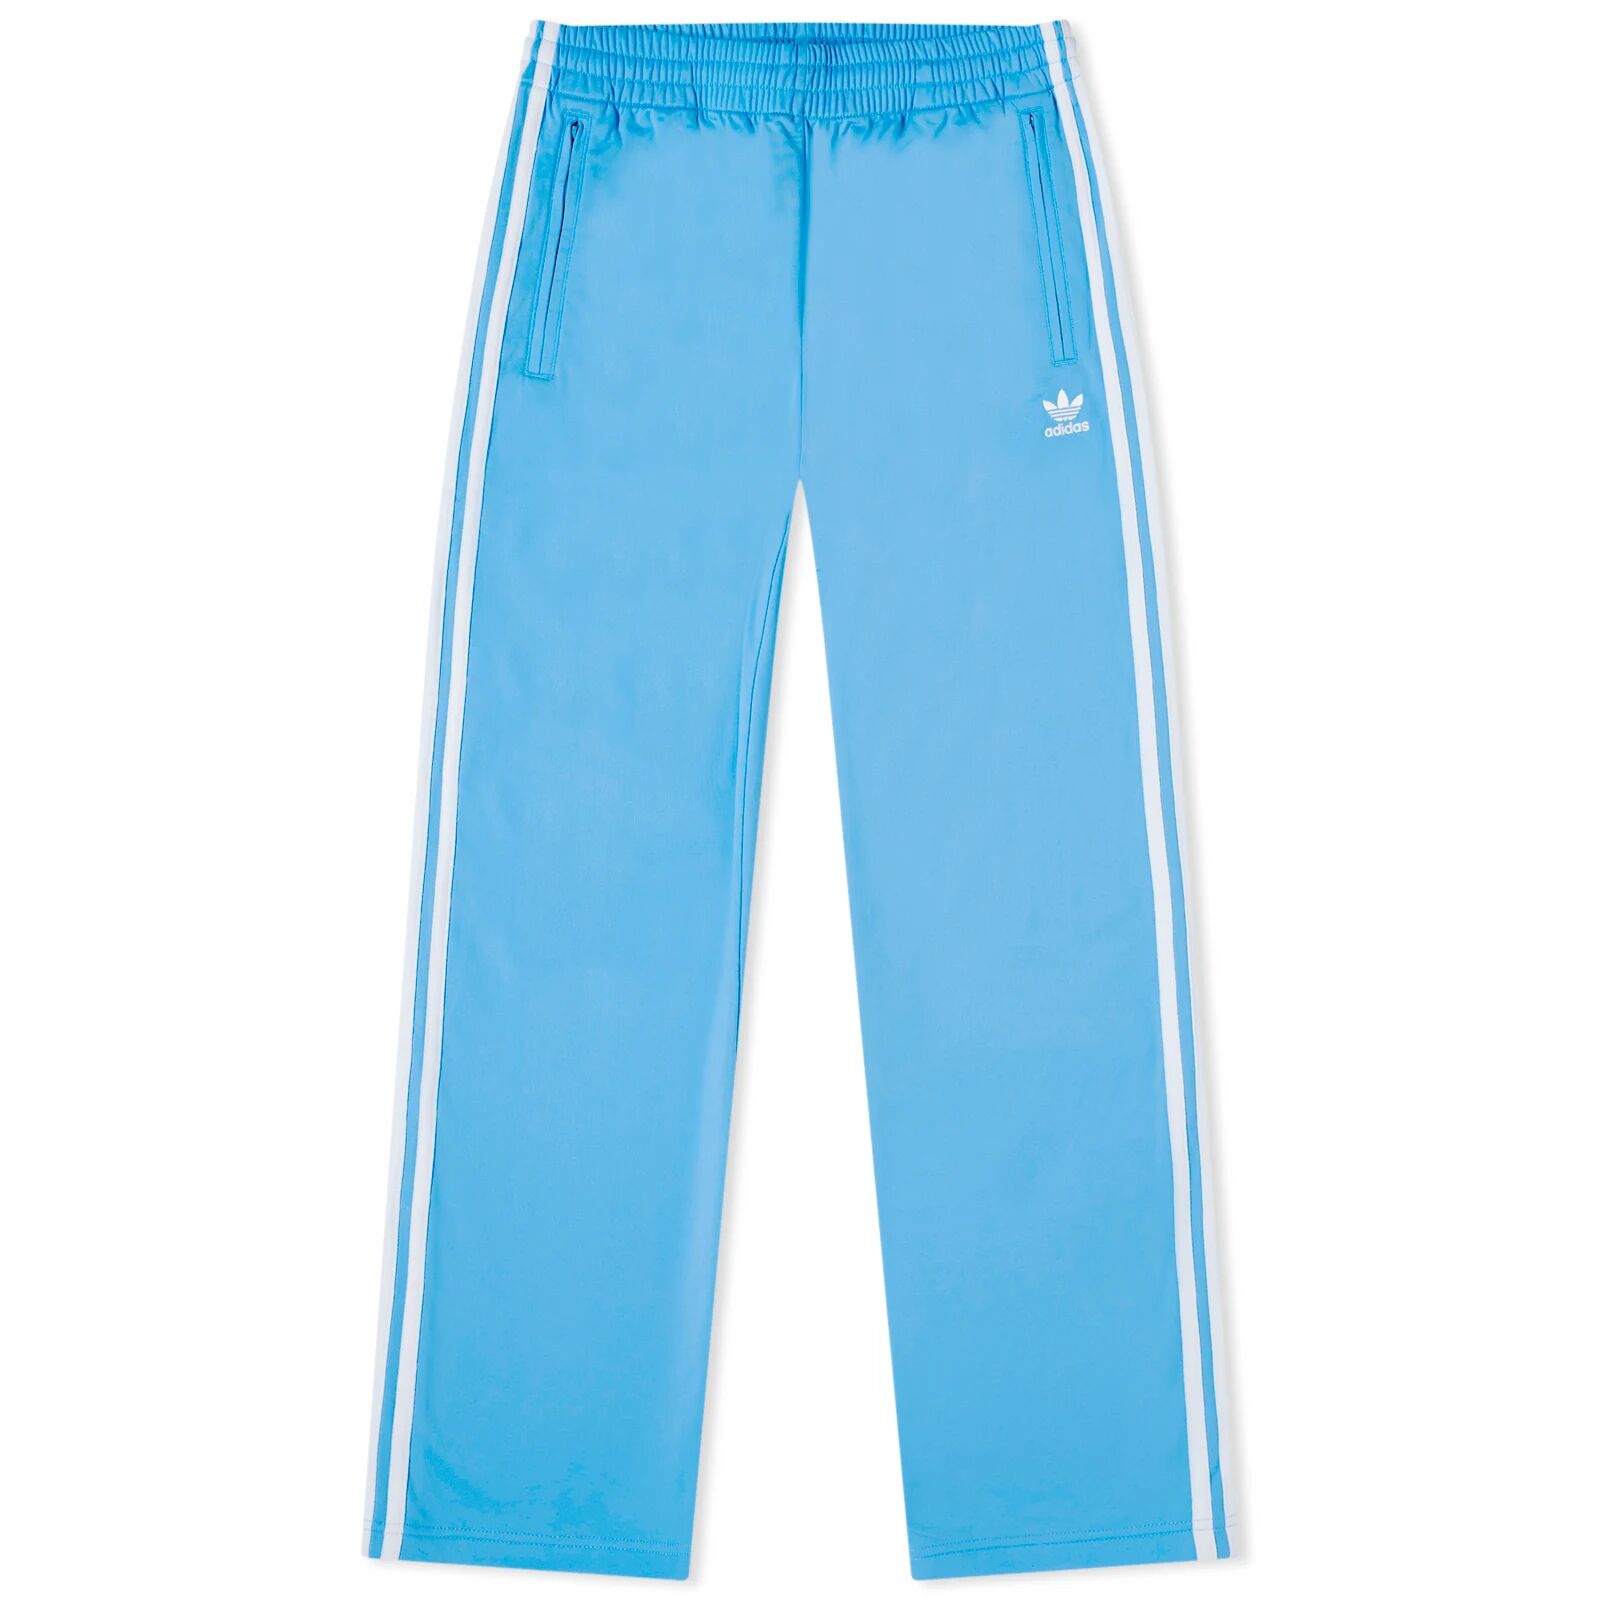 Adidas Men's Firebird Track Pant in Semi Blue Burst, Size Small